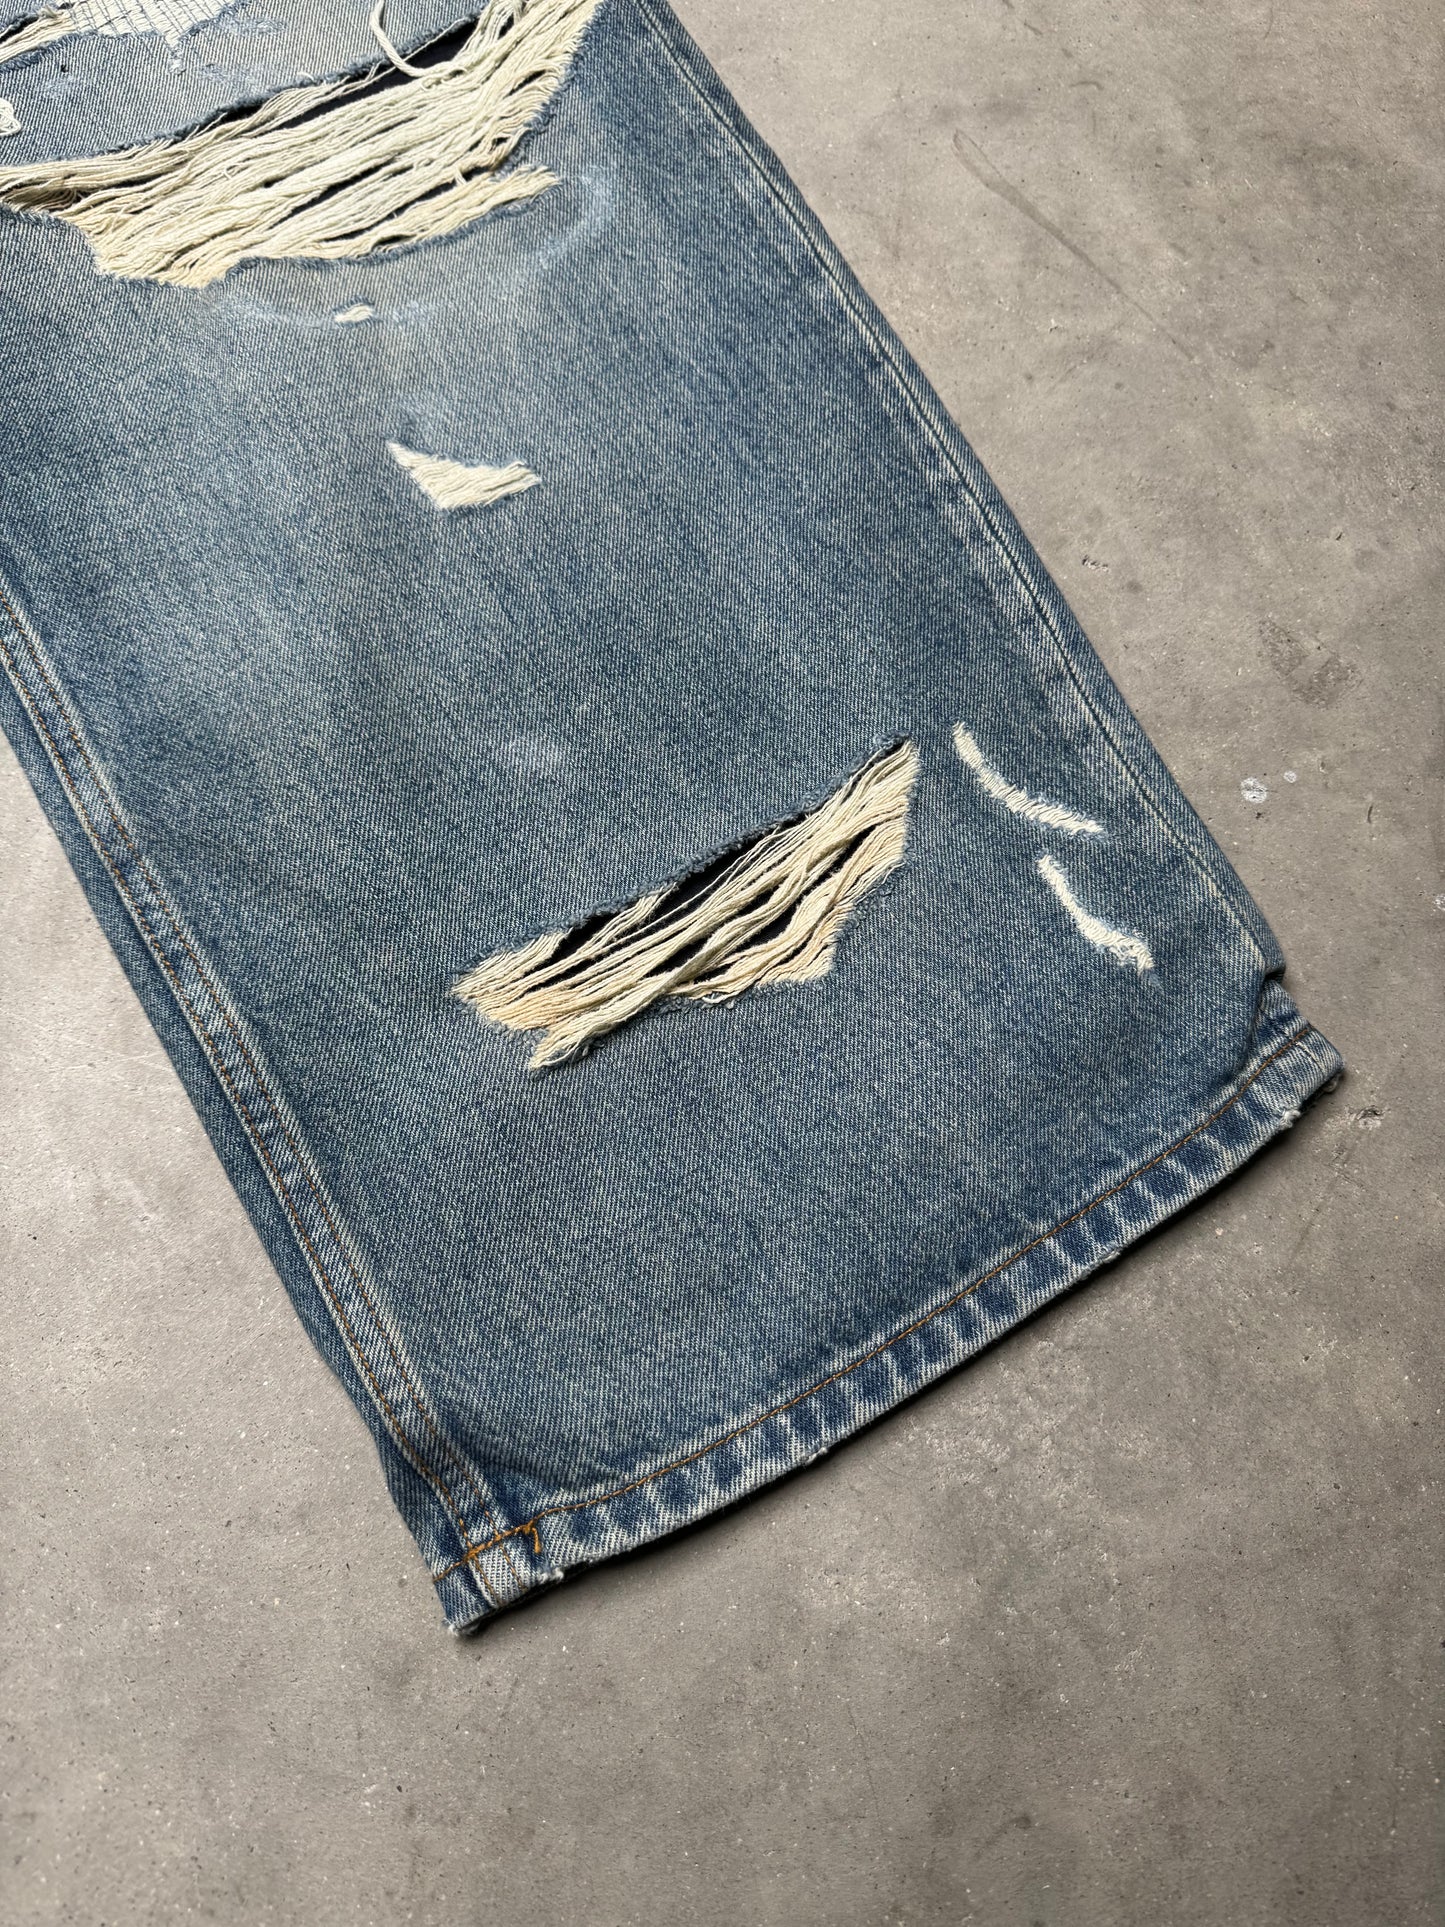 Balenciaga Fall 21 Distressed Double Layered Japanese Denim Jeans